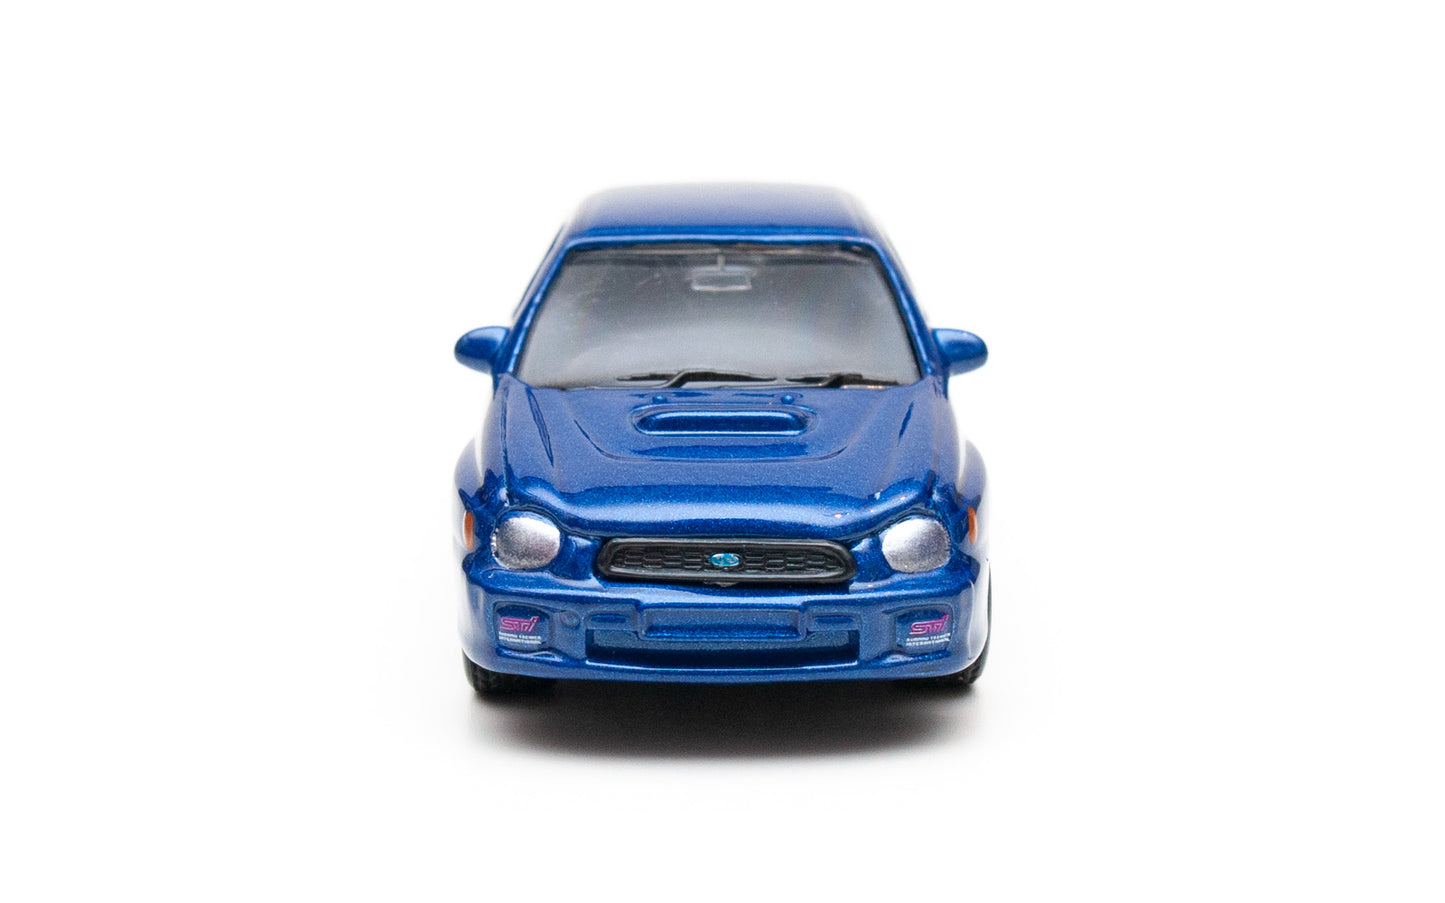 NEX Models Subaru Impreza WRX STi